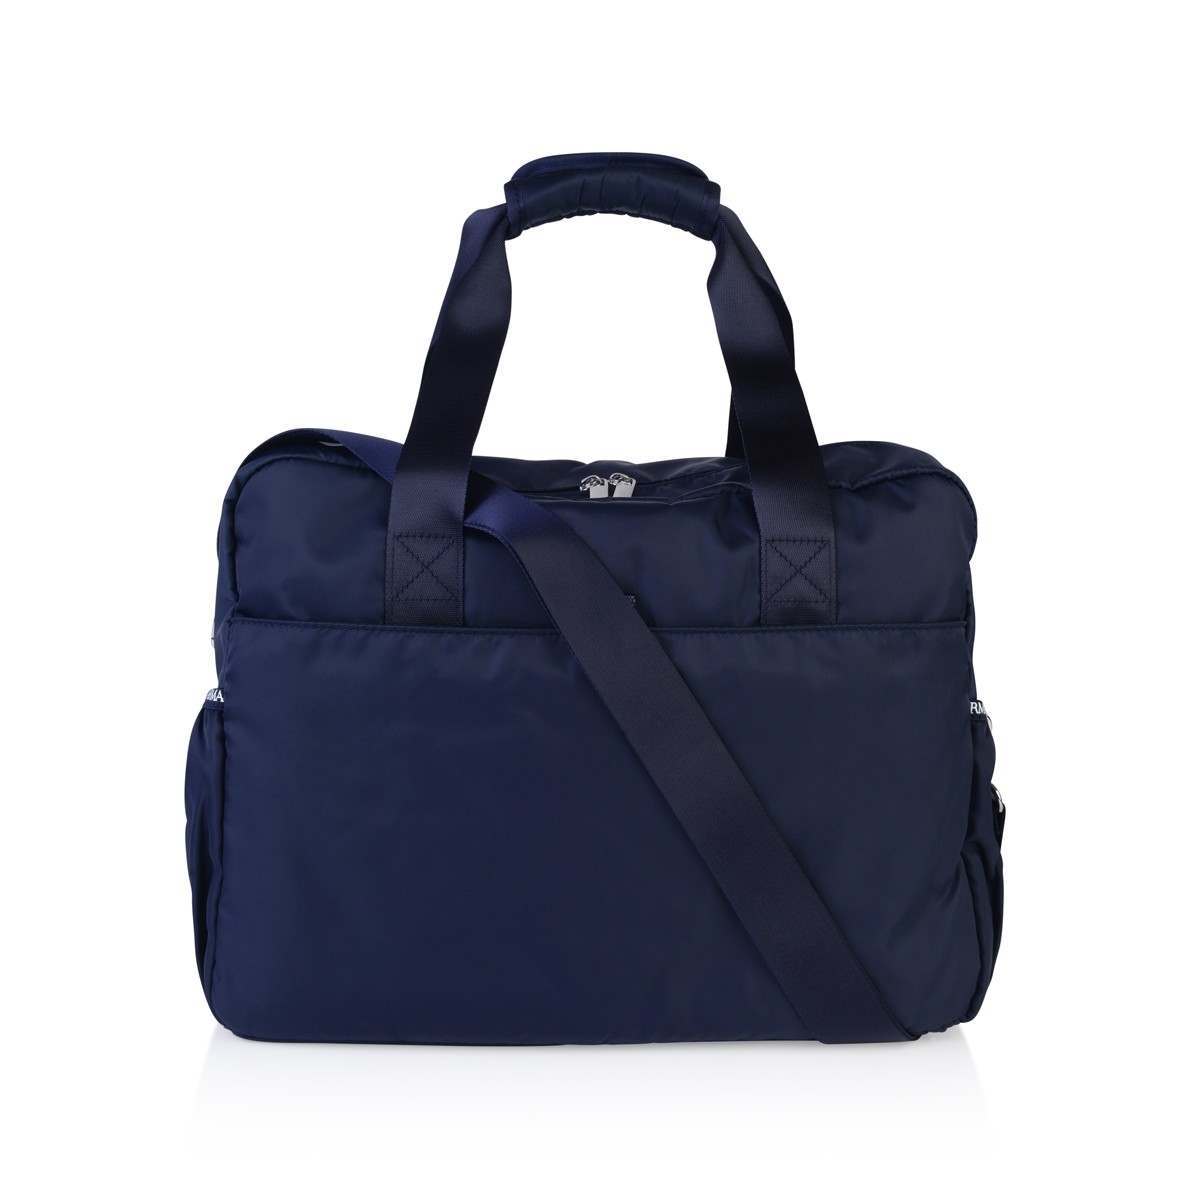 Grey and Navy Blue Logo - Armani Navy Blue Logo Baby Changing Bag